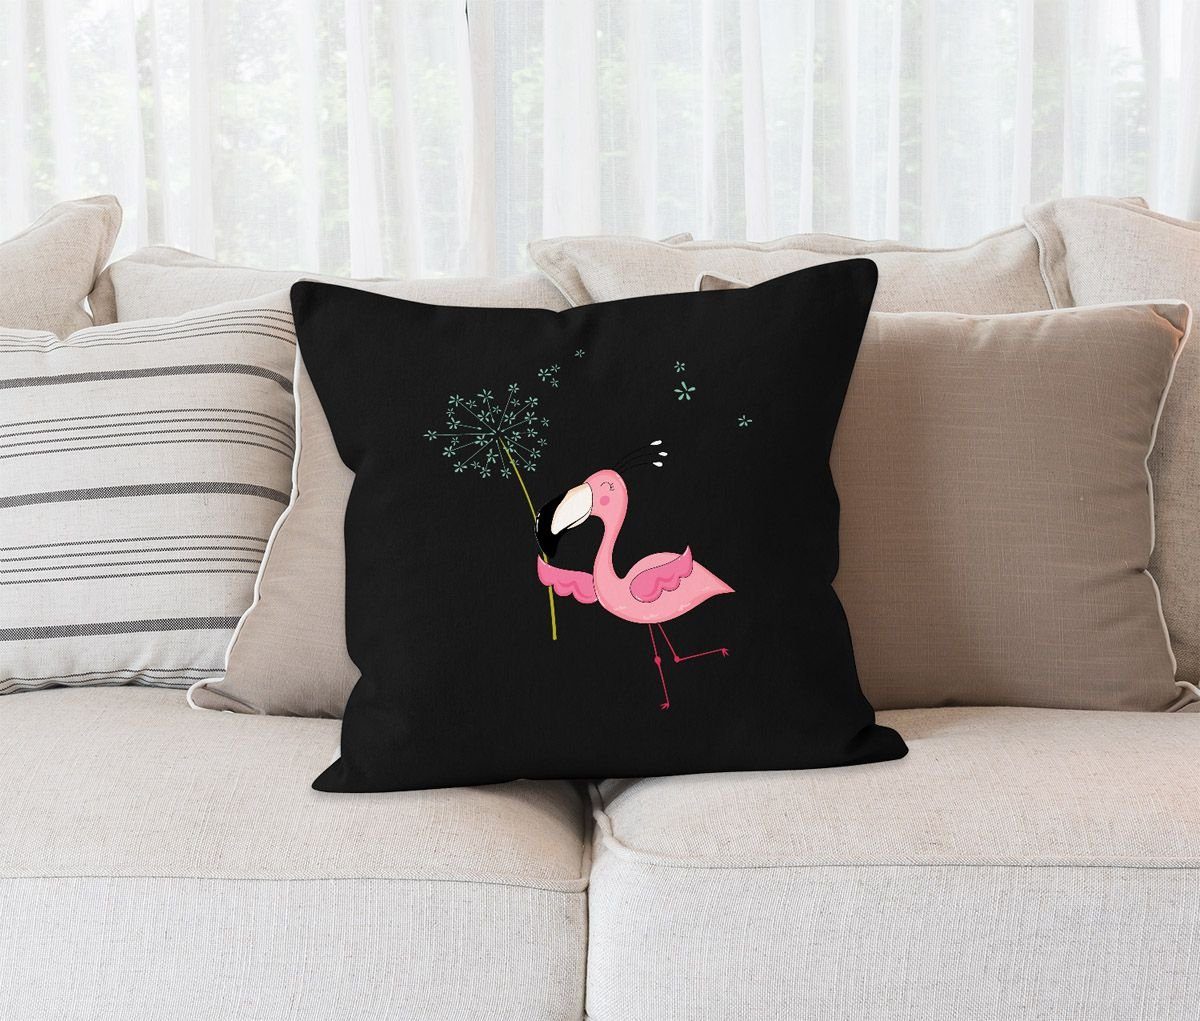 MoonWorks Dekokissen Kissen-Bezug Flamingo Pusteblume Baumwolle MoonWorks® Deko-Kissen schwarz Kissen-Hülle Dandelion